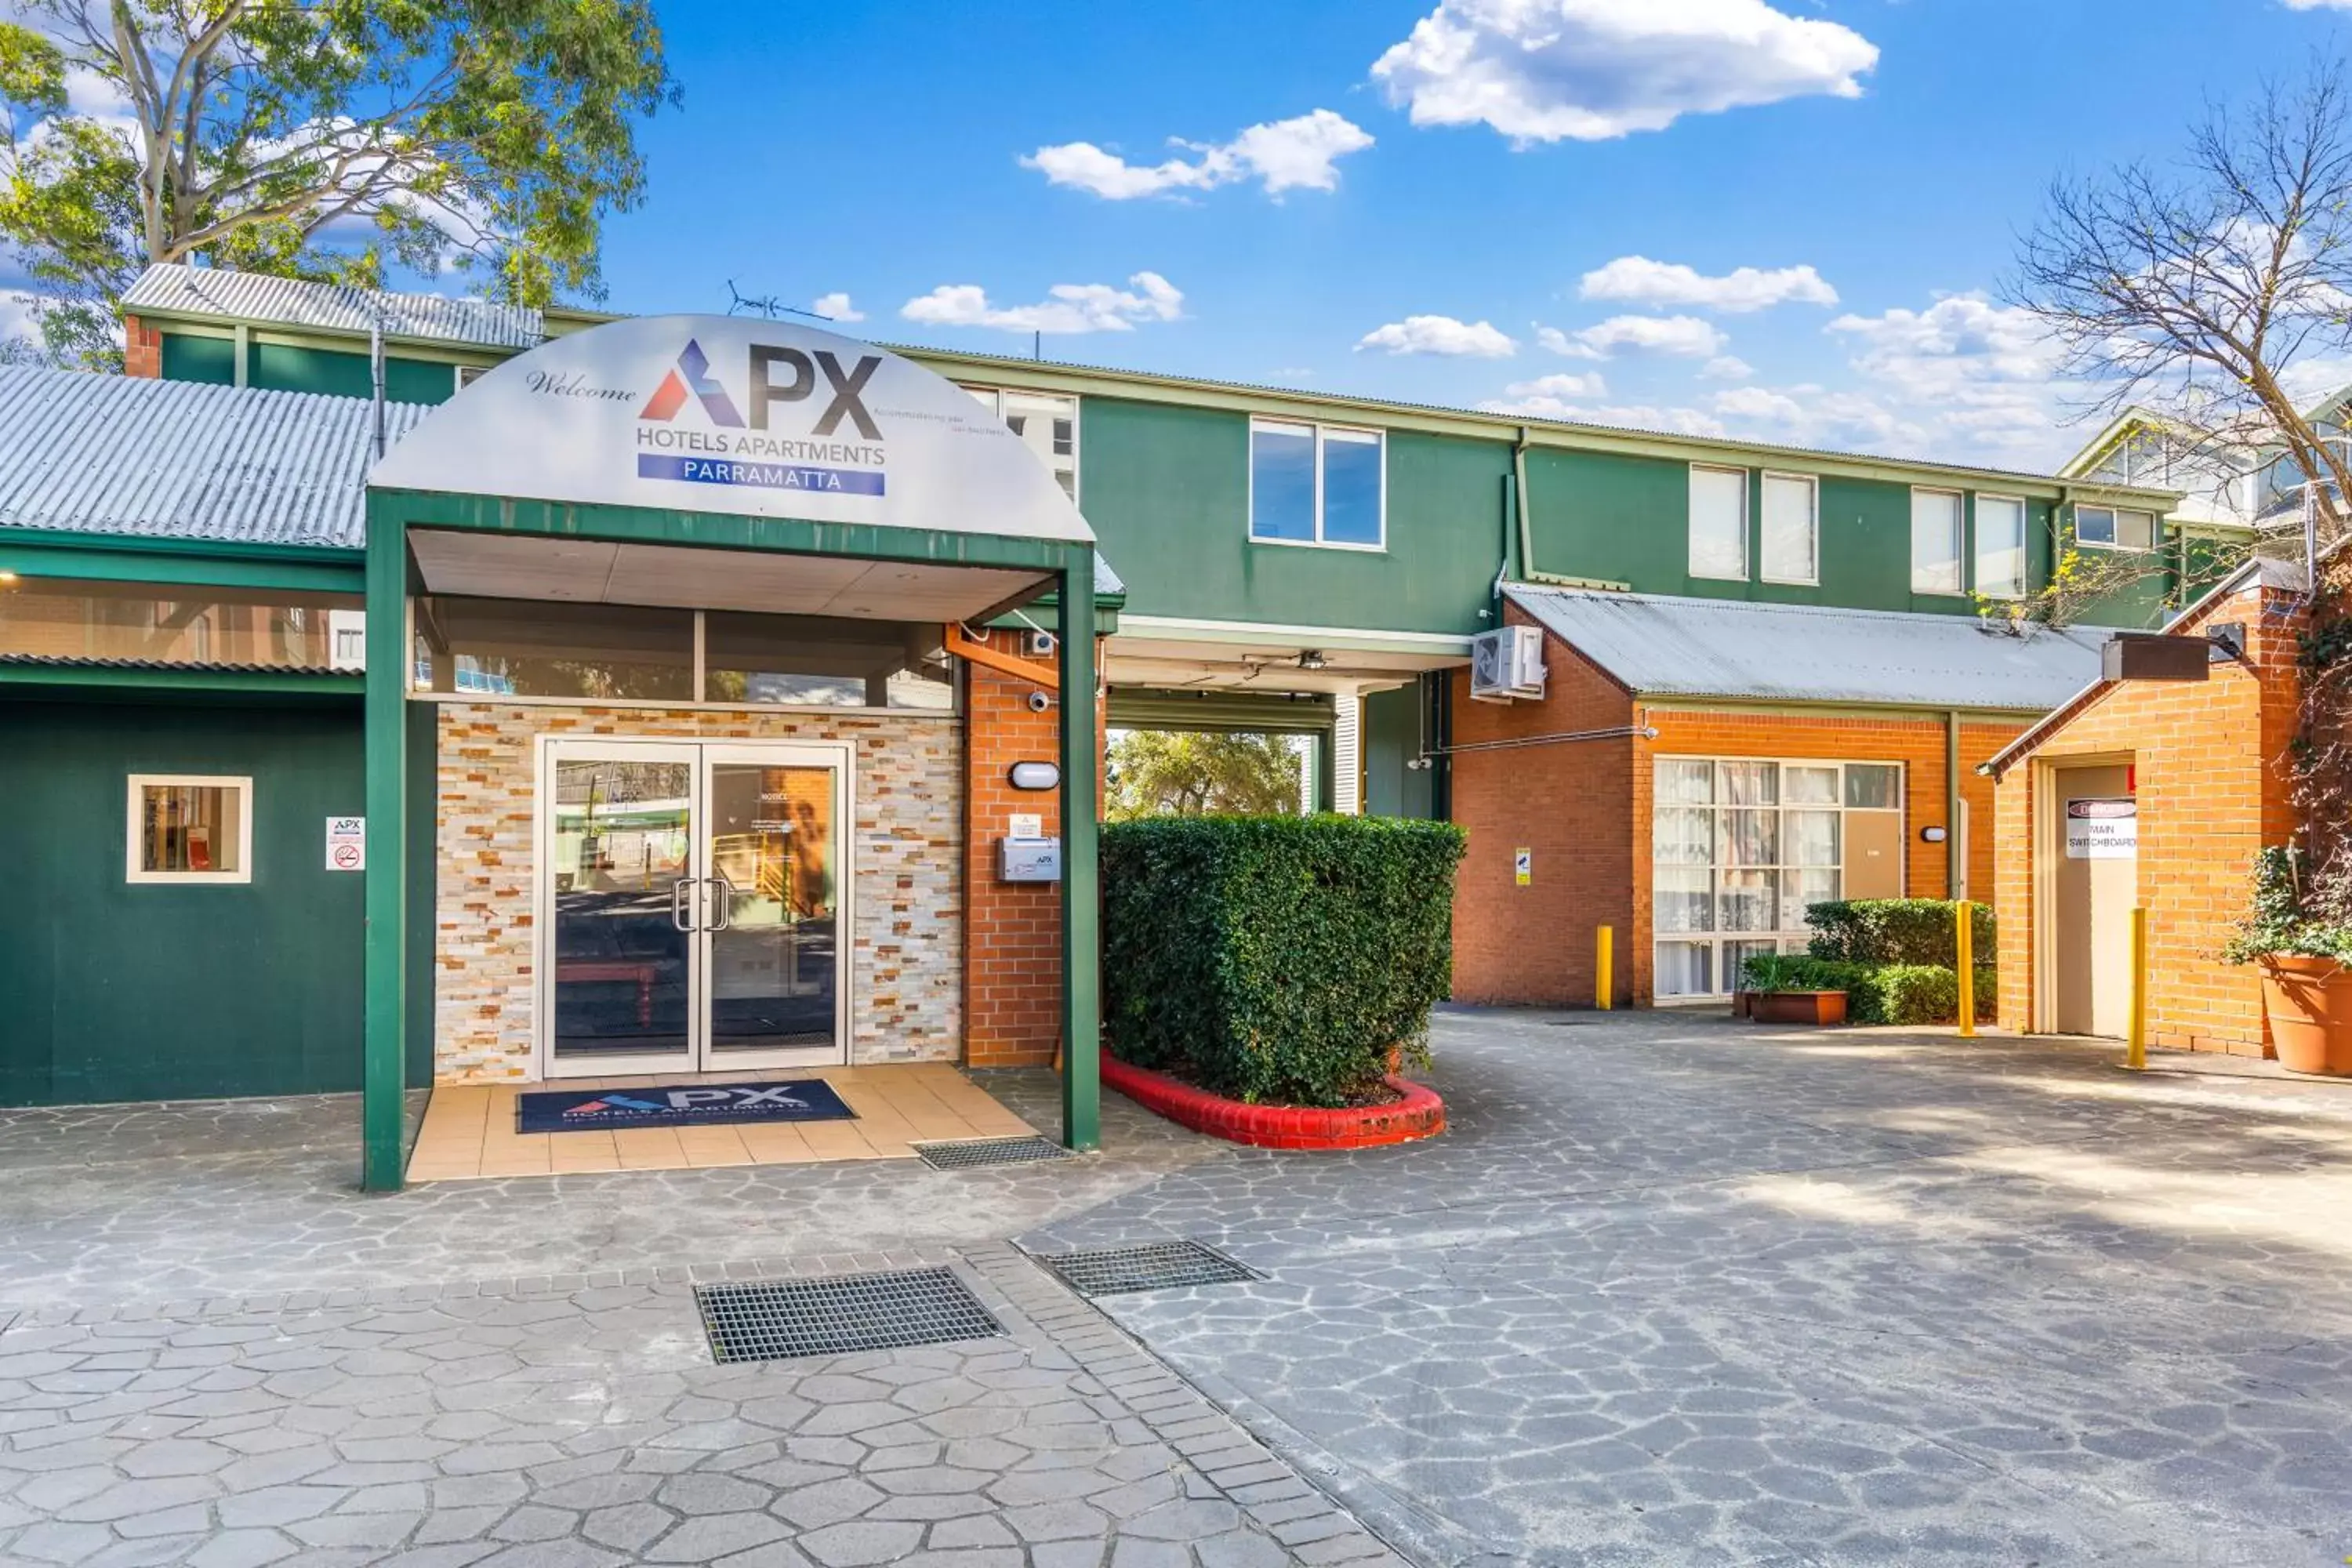 Property building in APX Parramatta